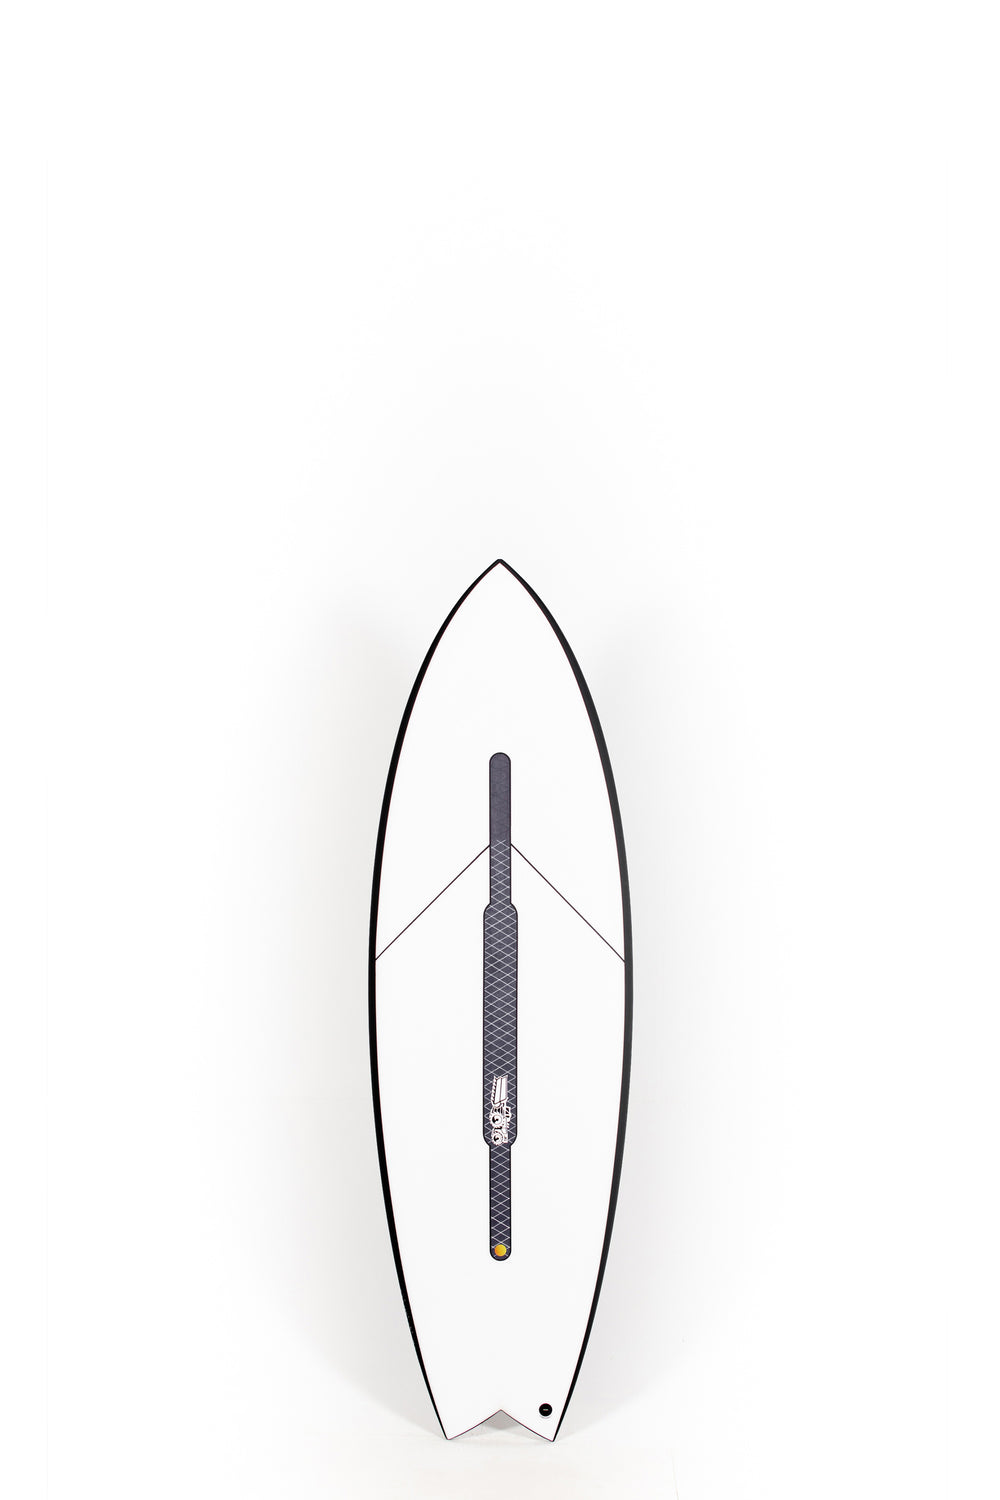 JS Surfboards - BLACK BARON HYFI 2.0 - 5'7